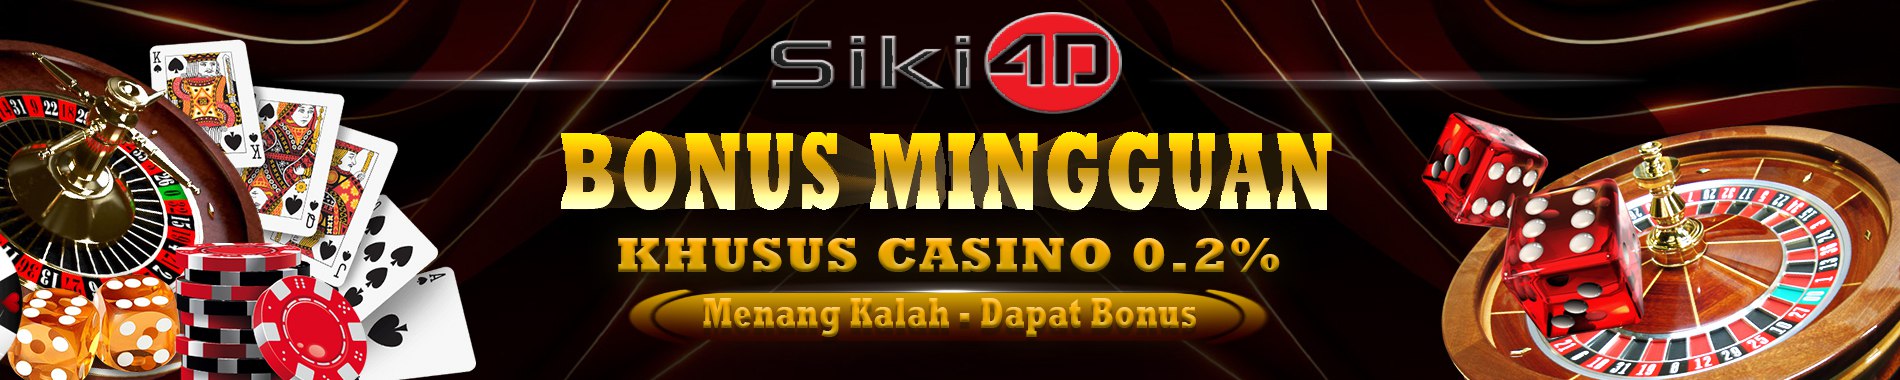 rollingan mingguan live casino siki4d